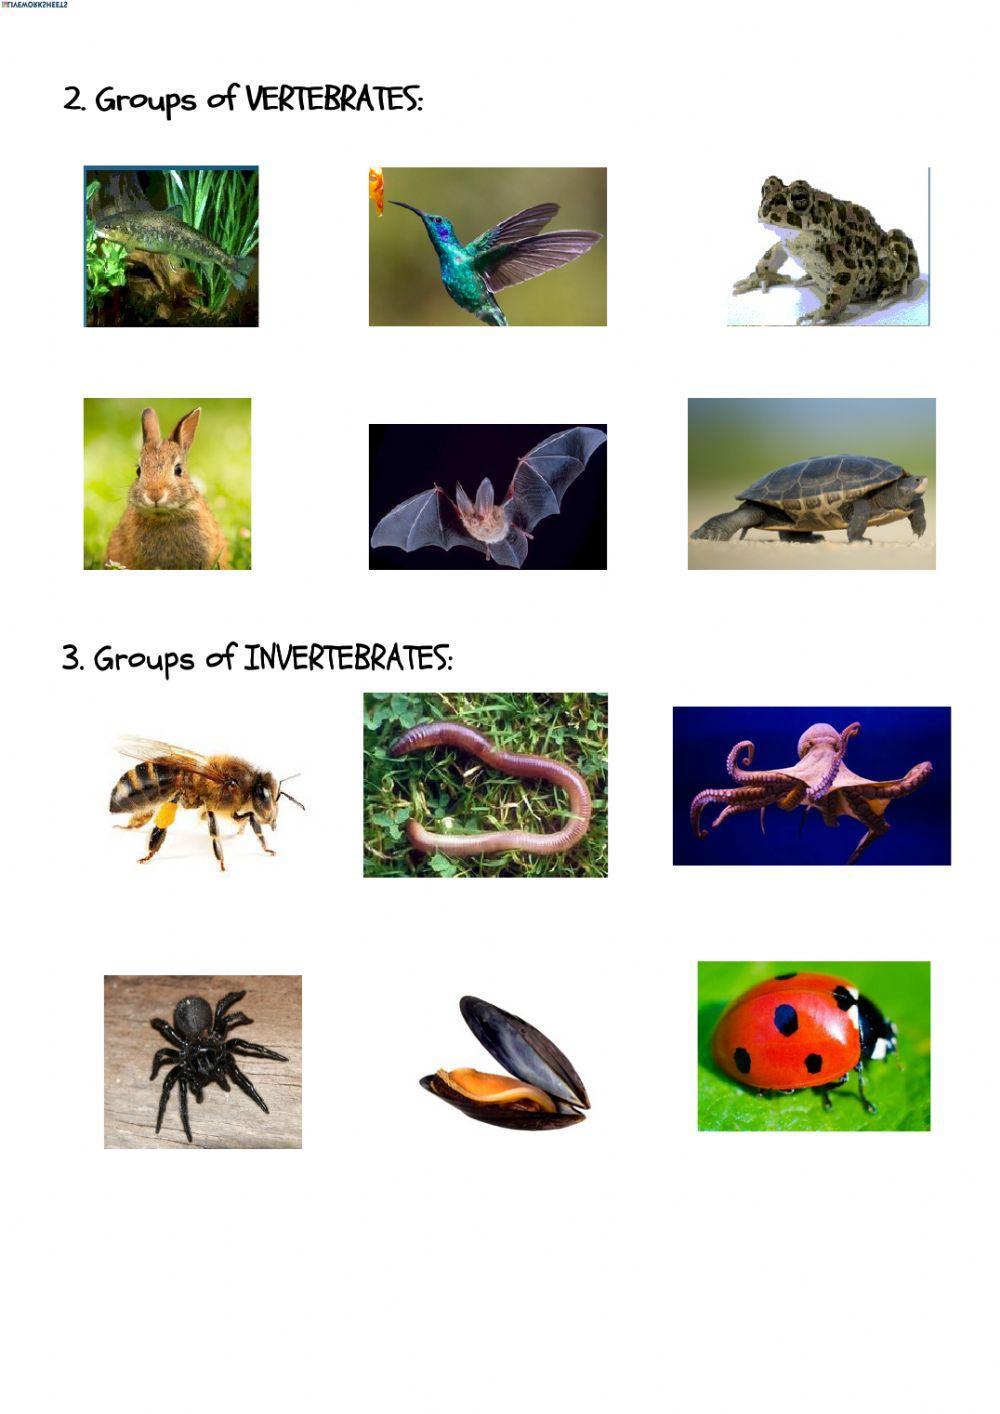 Vertebrates or invertebrates?